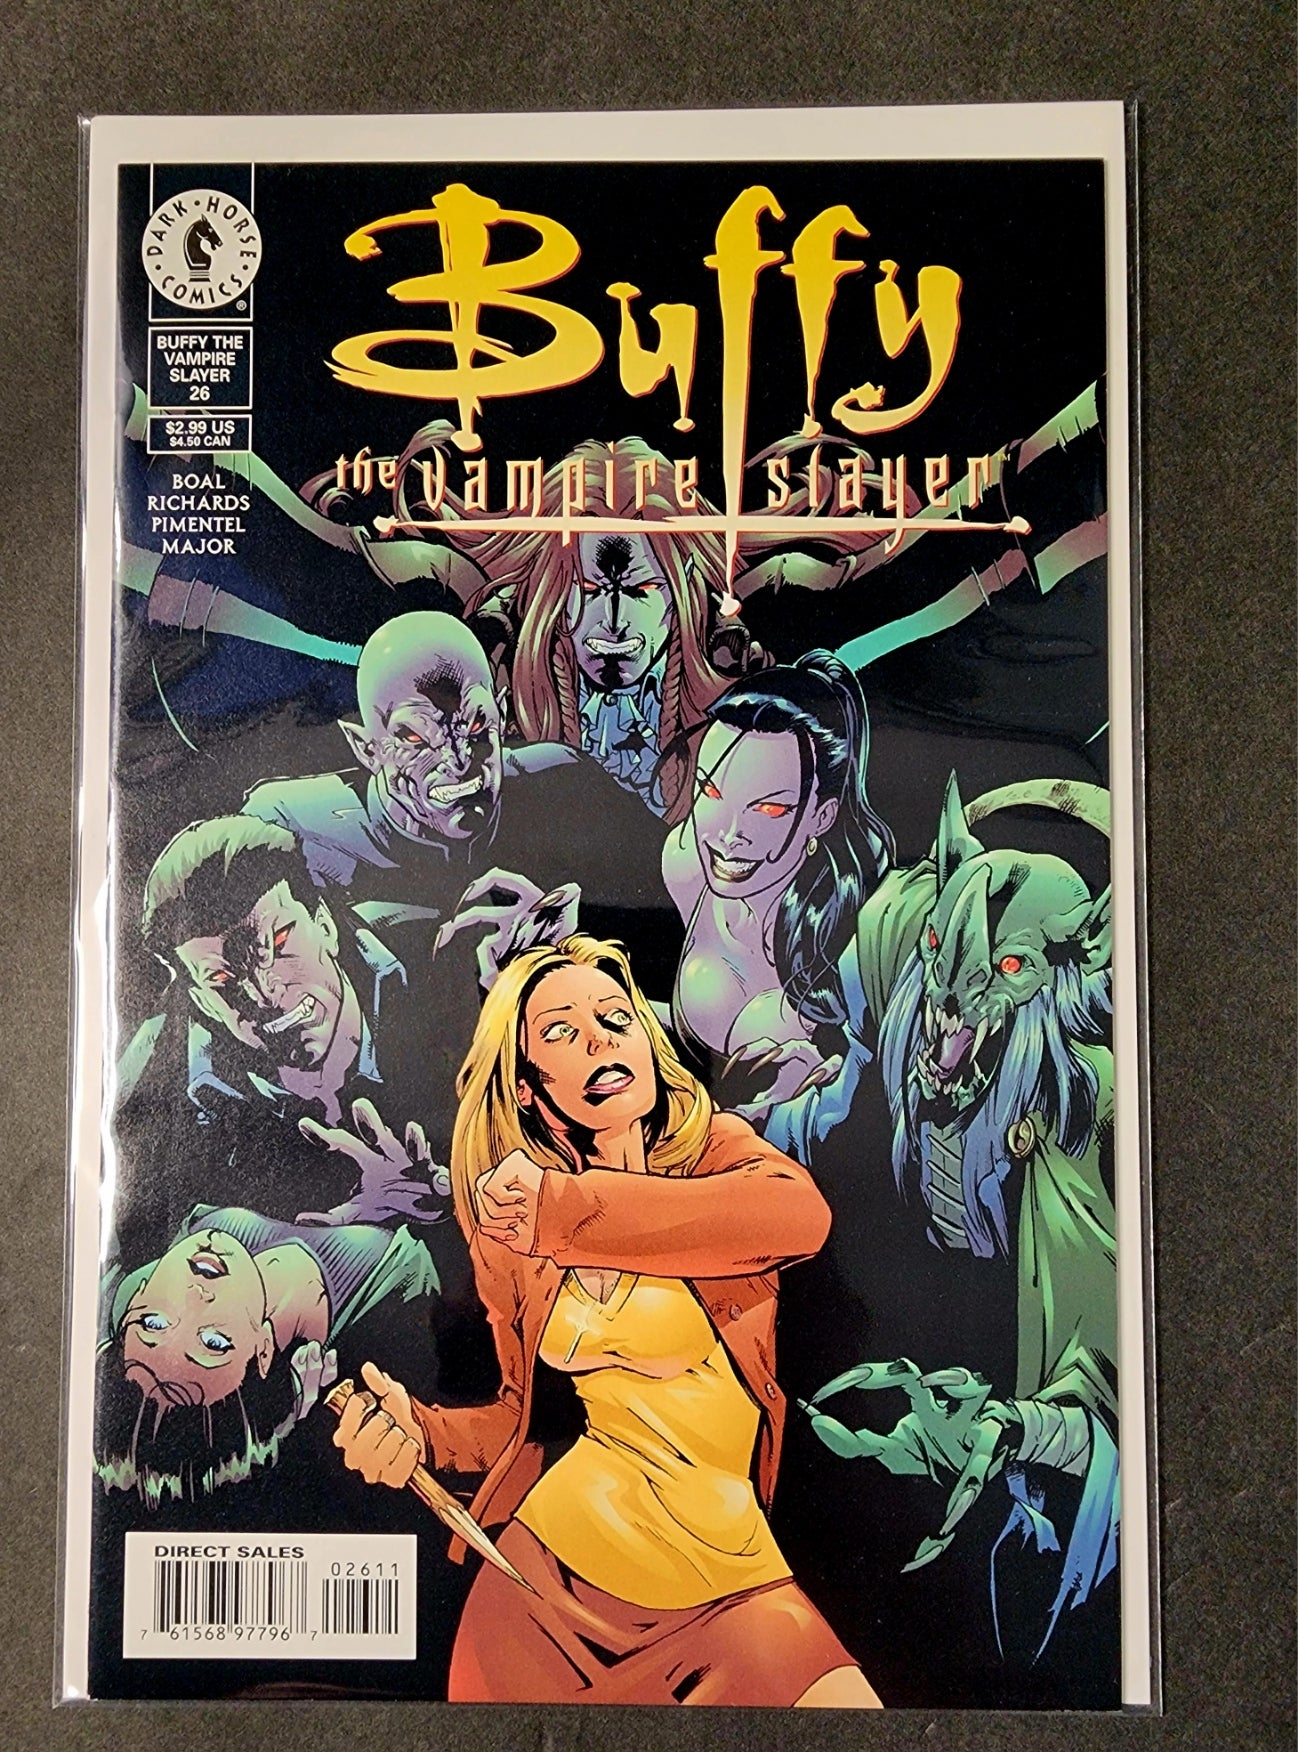 Buffy the Vampire Slayer #26 (NM-)